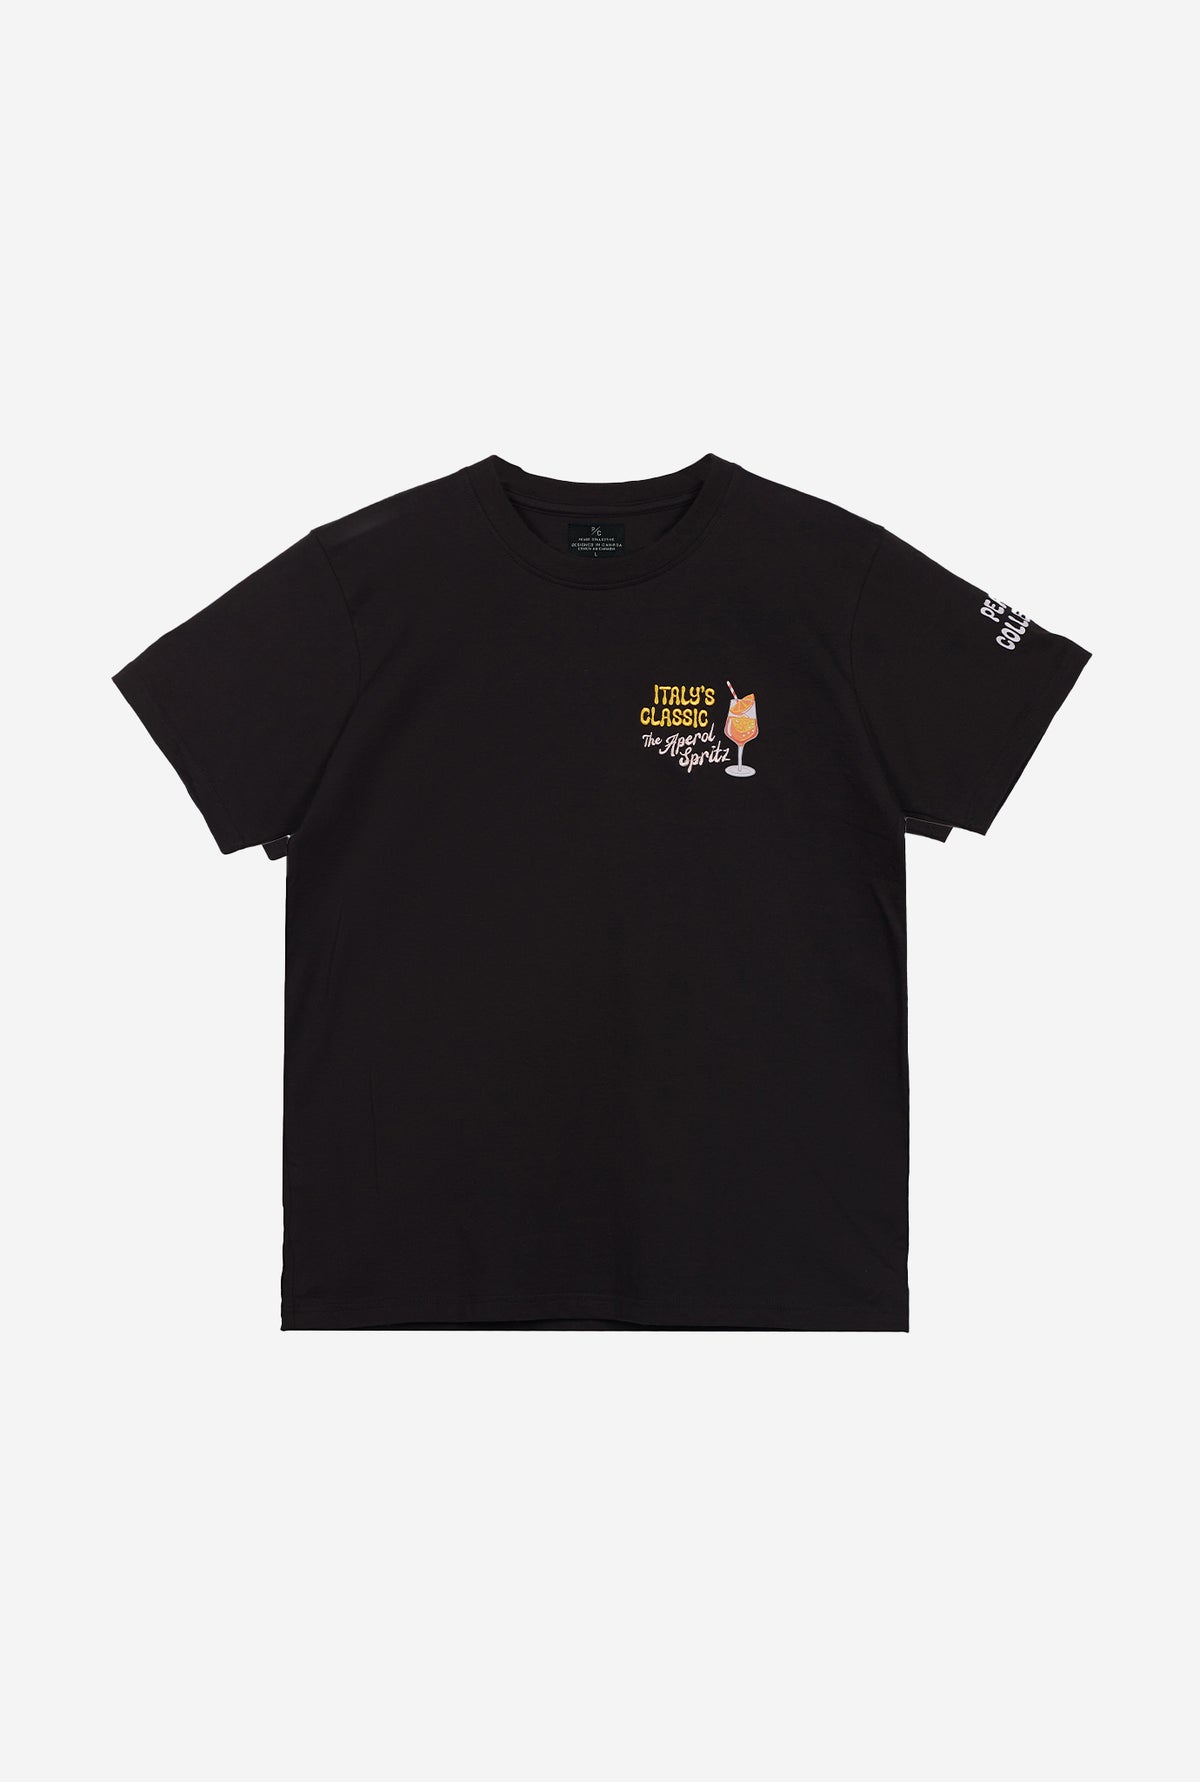 Aperol Spritz T-Shirt - Black